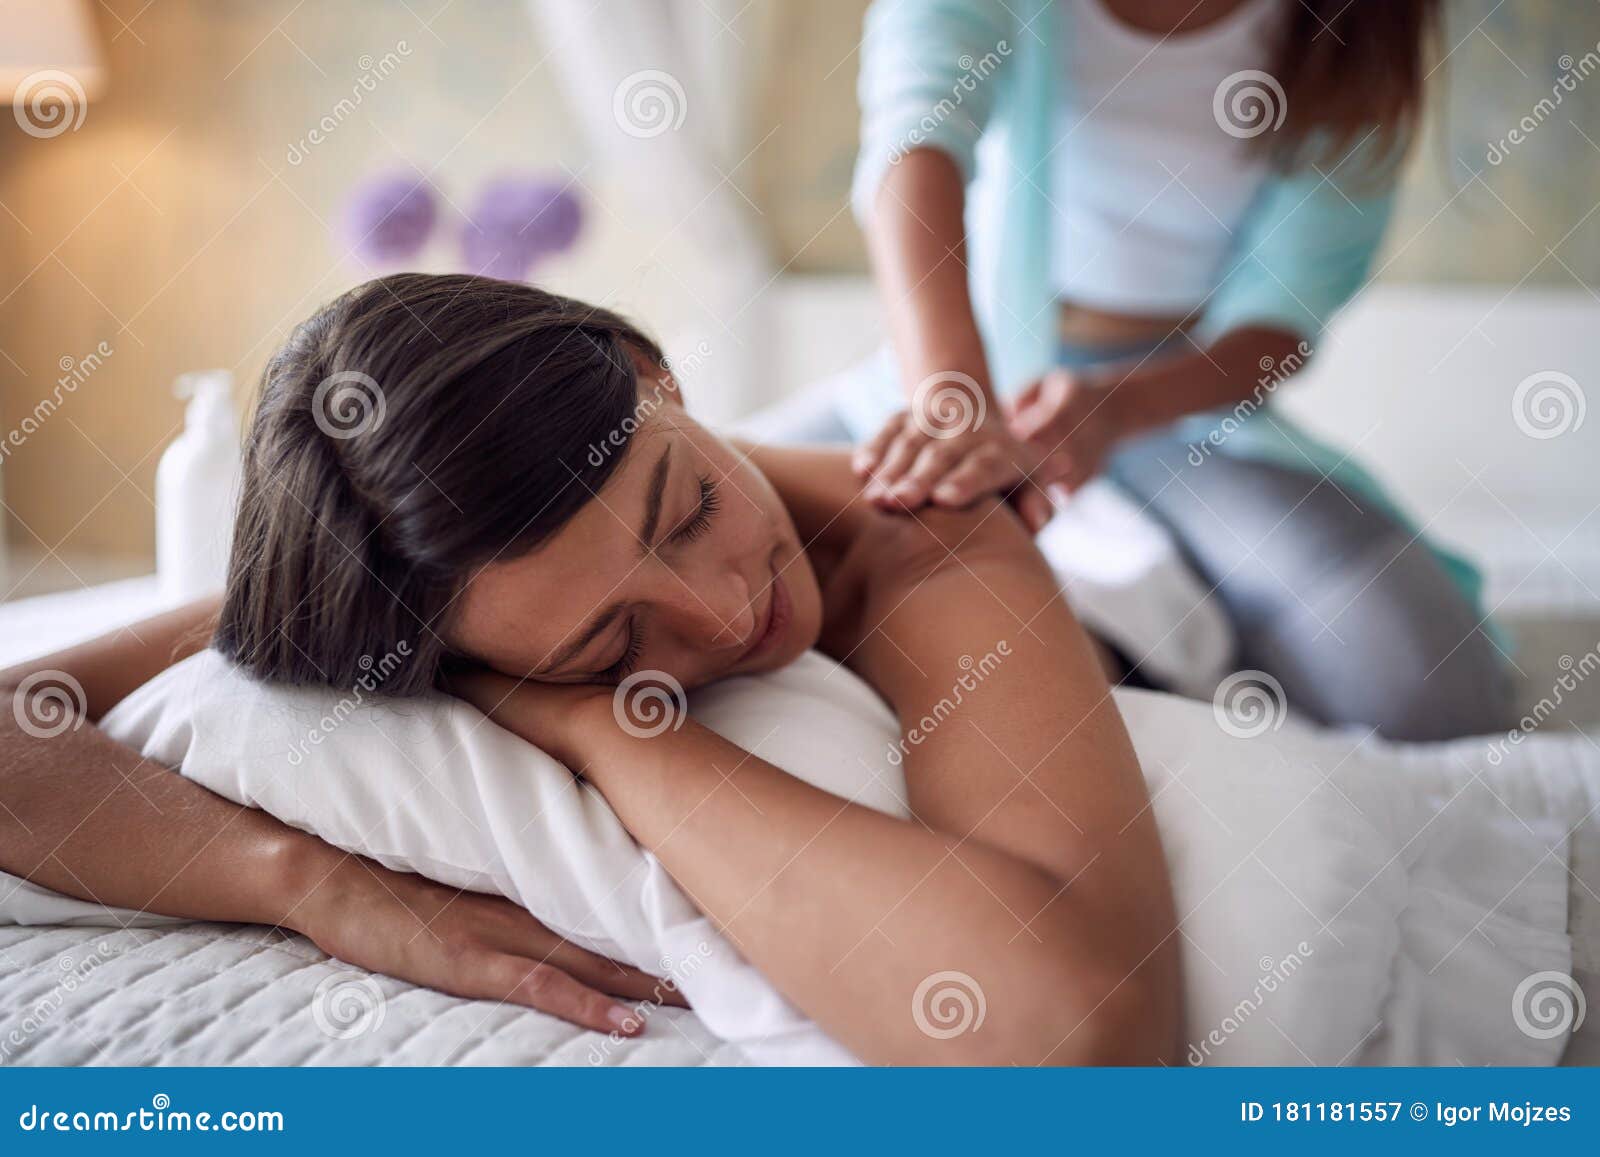 arnulfo estrada add photo lezbian massage